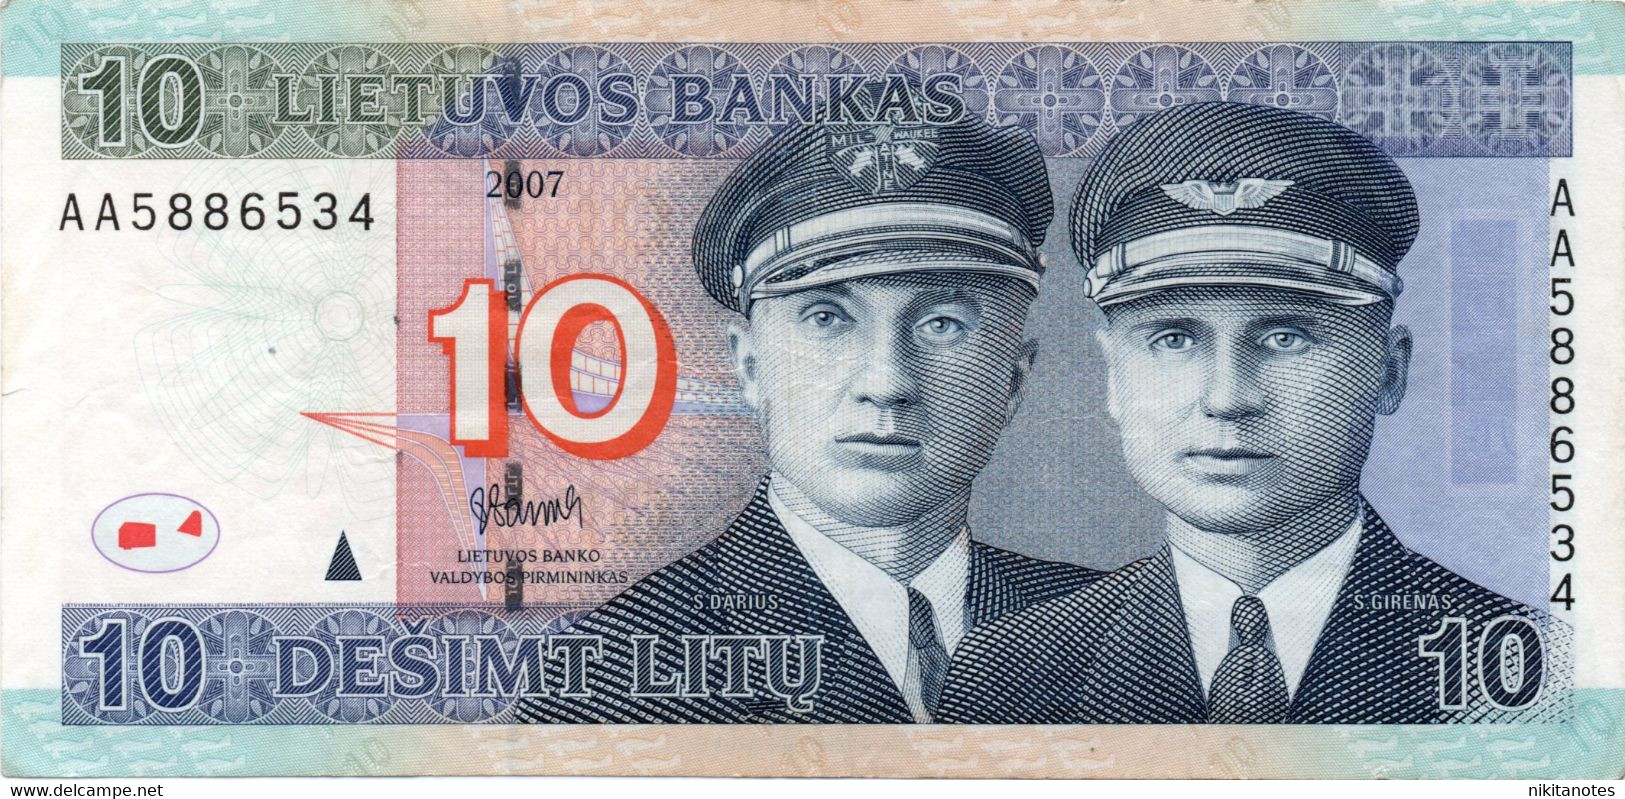 LITHUANIA 10 LITU 2007  P 68 See Scan Note - Lithuania